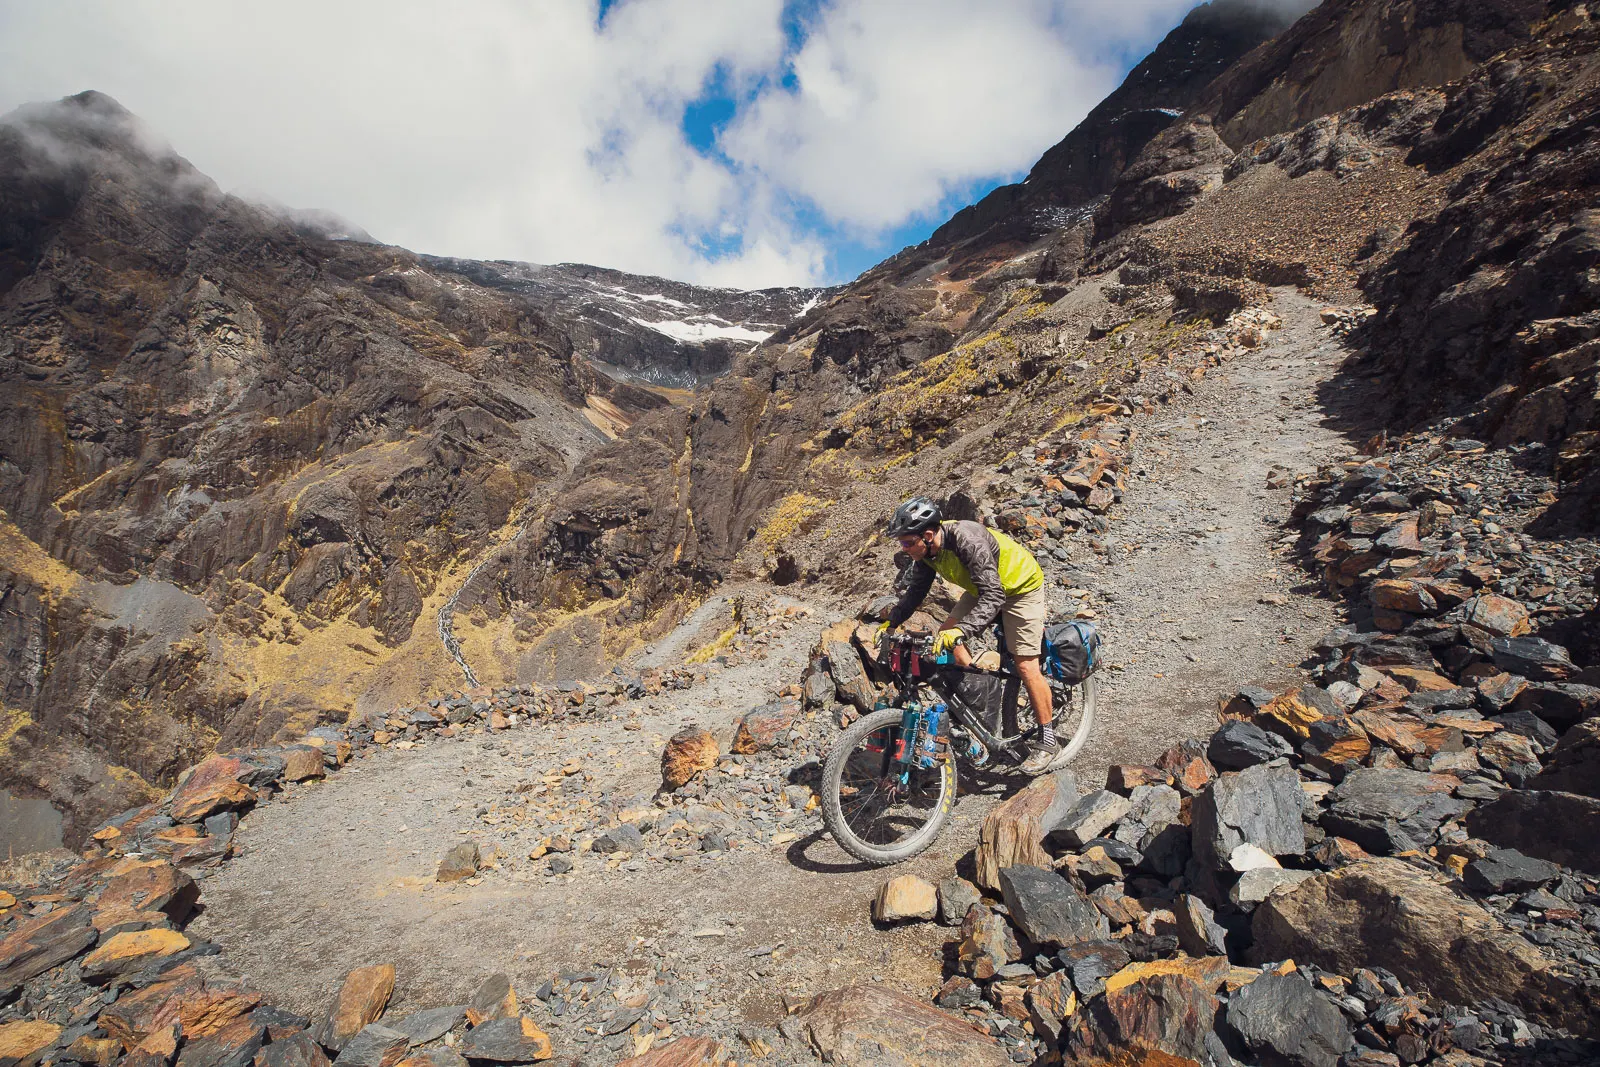 Hana Black and Mark Watson ride their Otso Cycles Voytek bikes on a long distance bikepacking trip in South America.